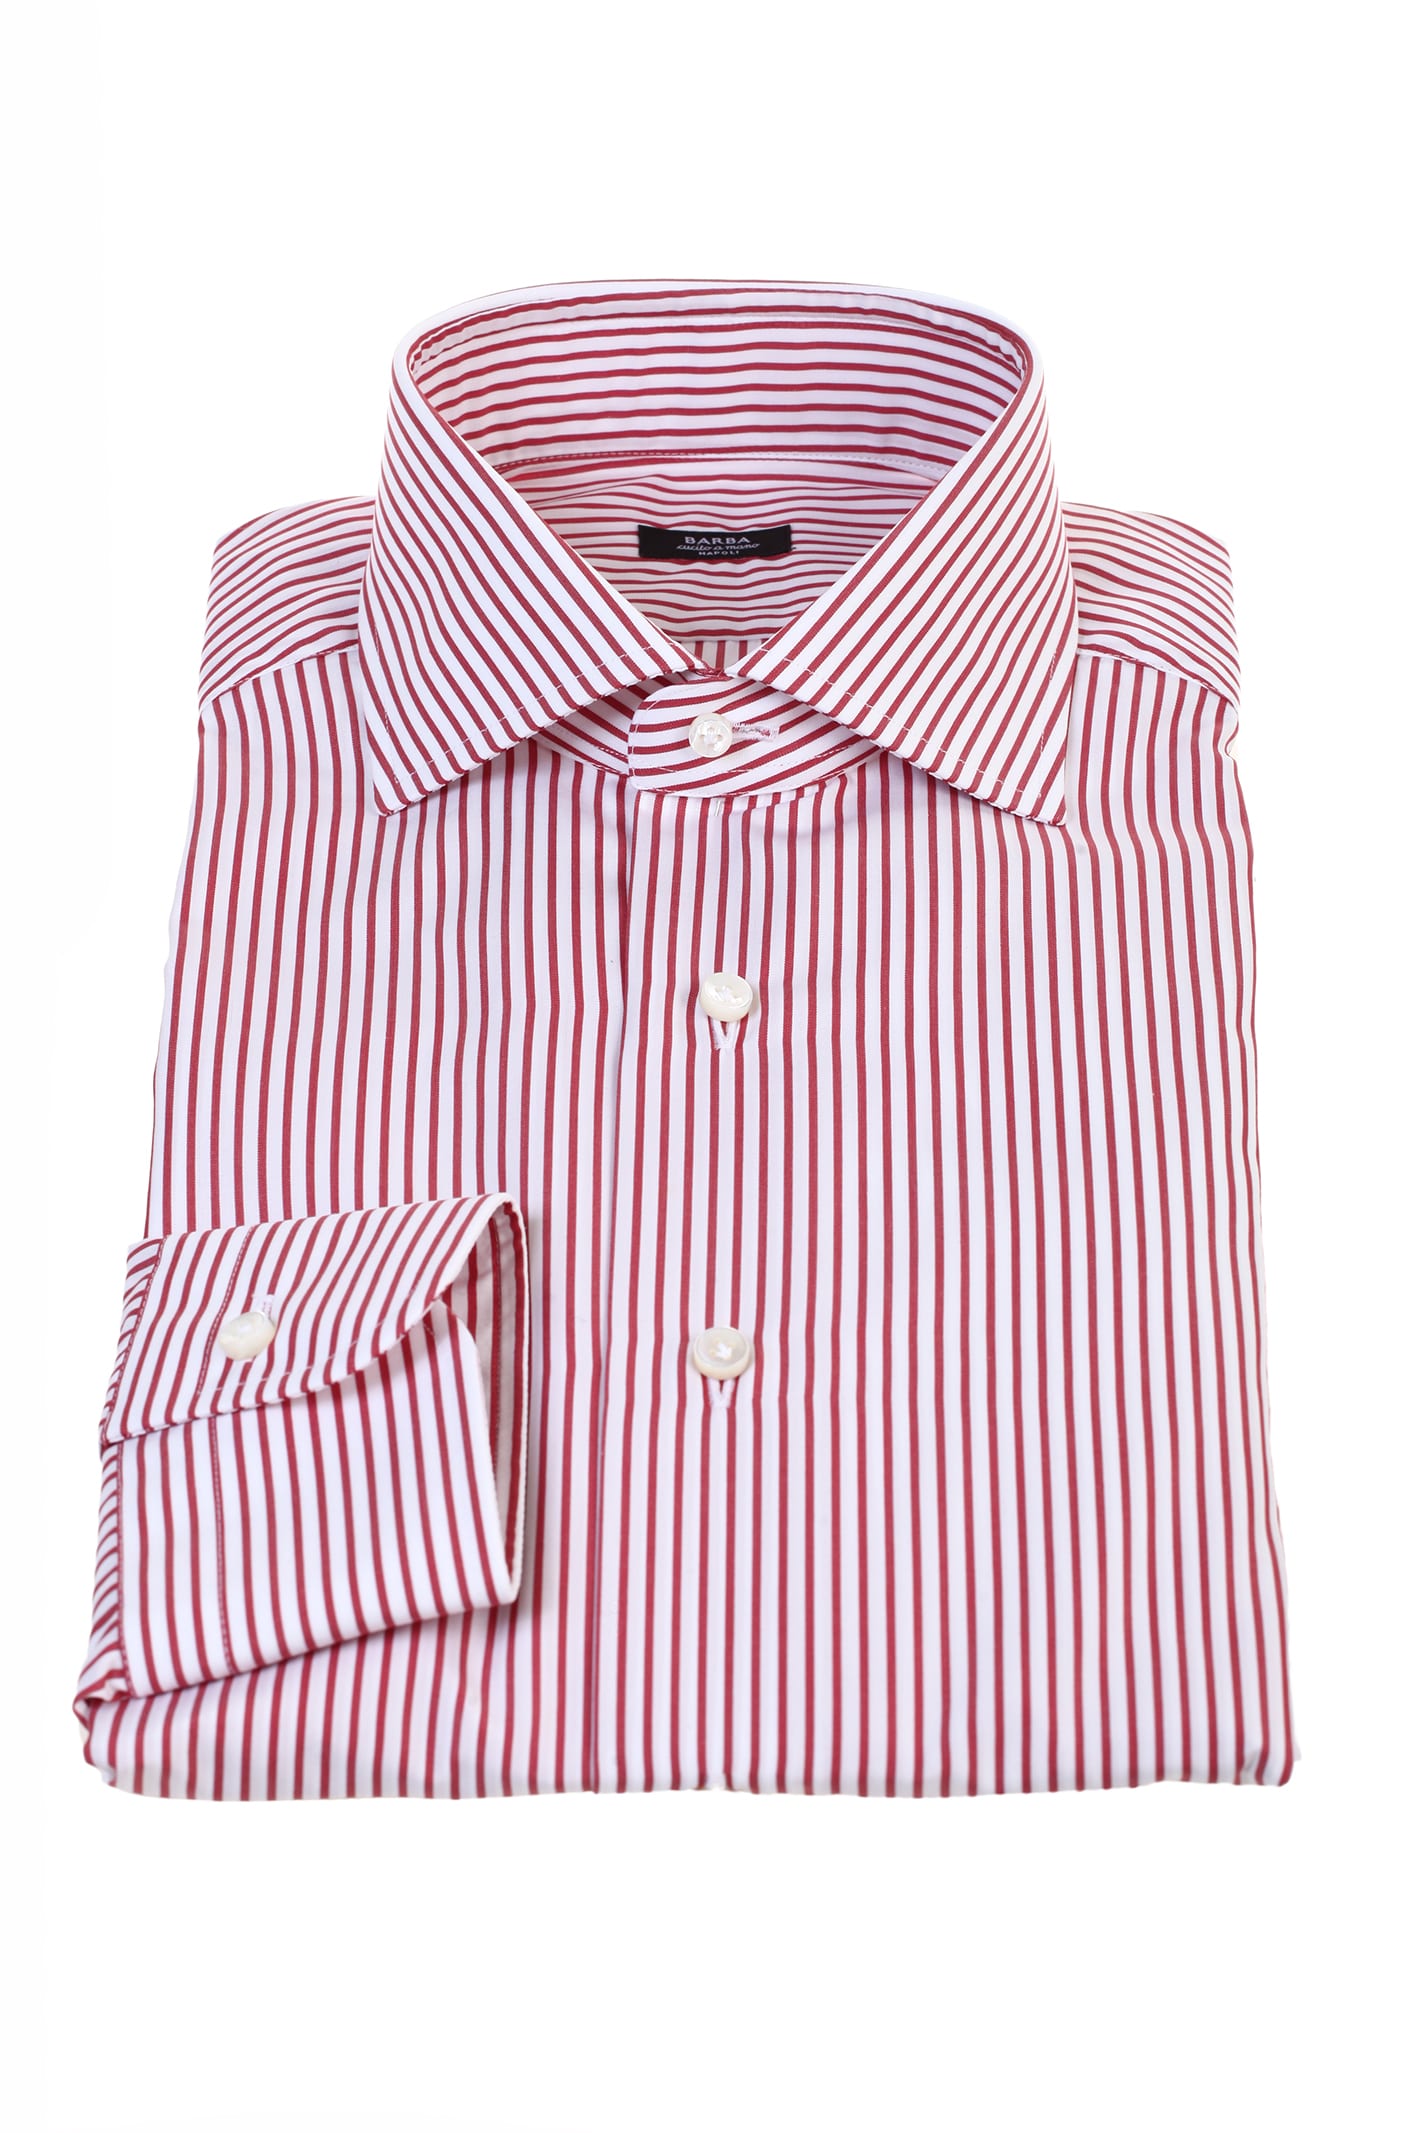 Barba Napoli Barba red and white vertical striped cotton shirt